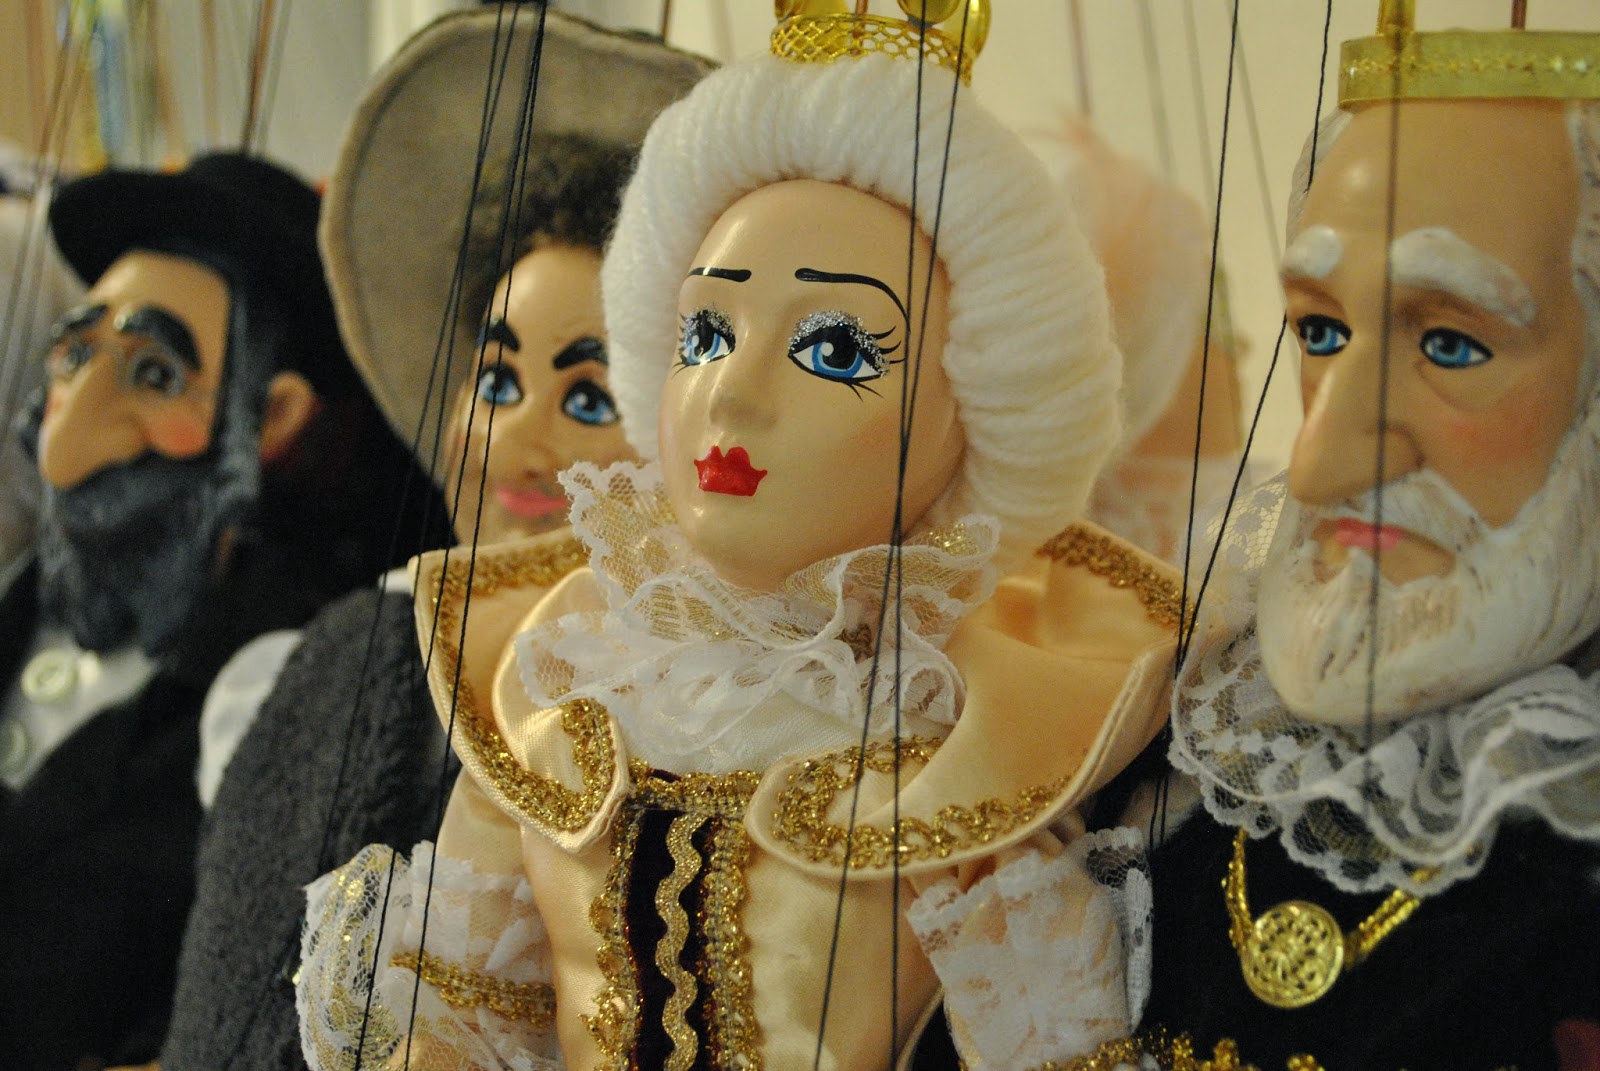 Мир театра кукол. Кукольный театр в Египте. Кукла марионетка. Театр кукол. Театральные куклы.